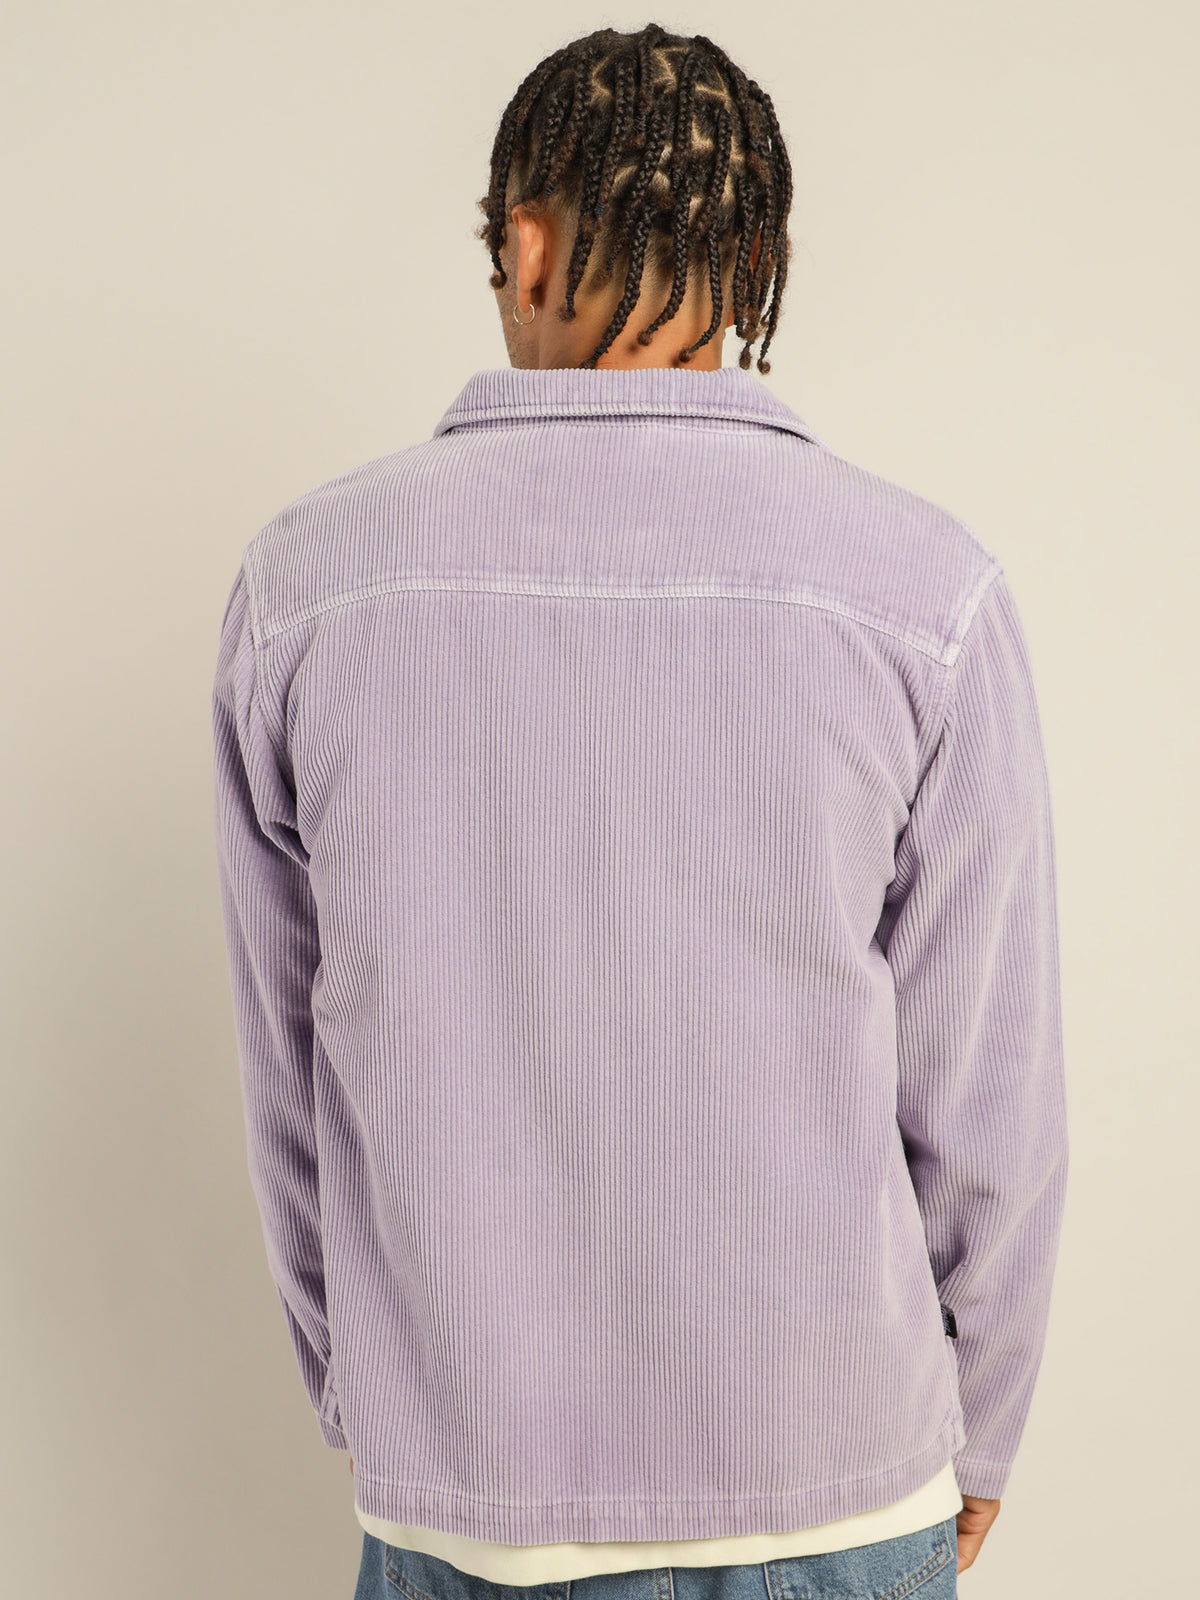 Tyler Cord Jacket in Lavender